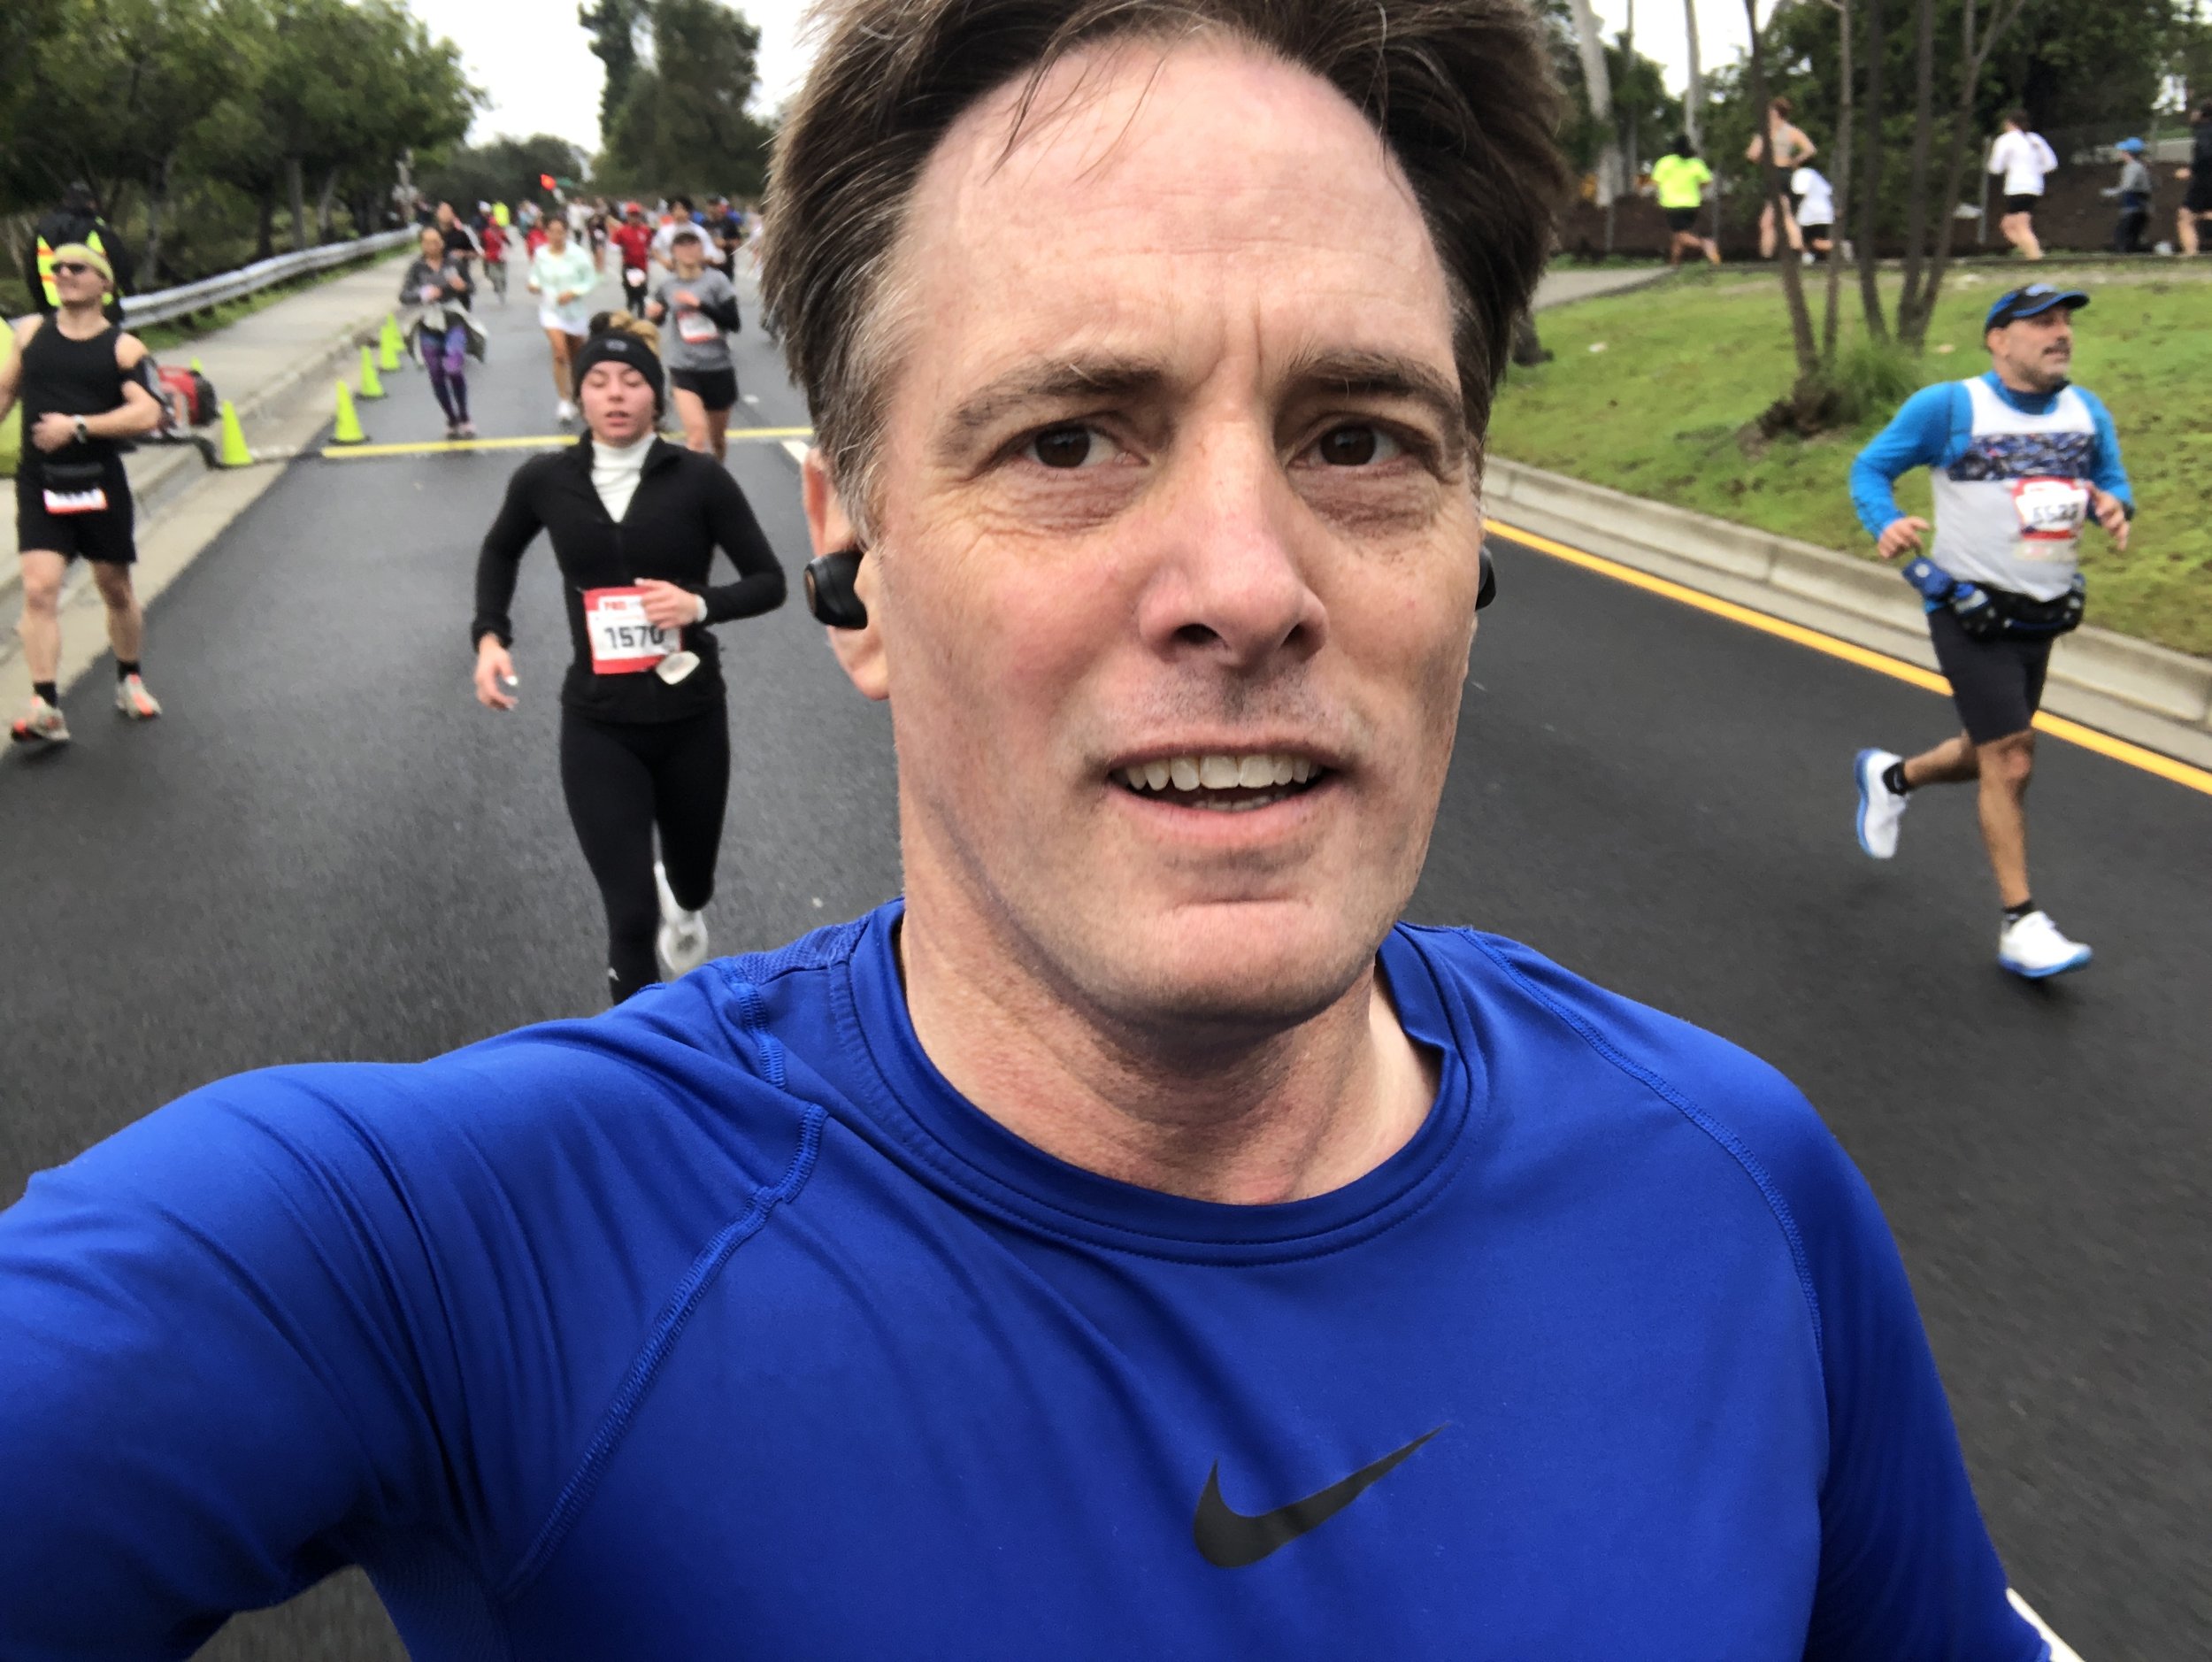 Running the Half Marathon